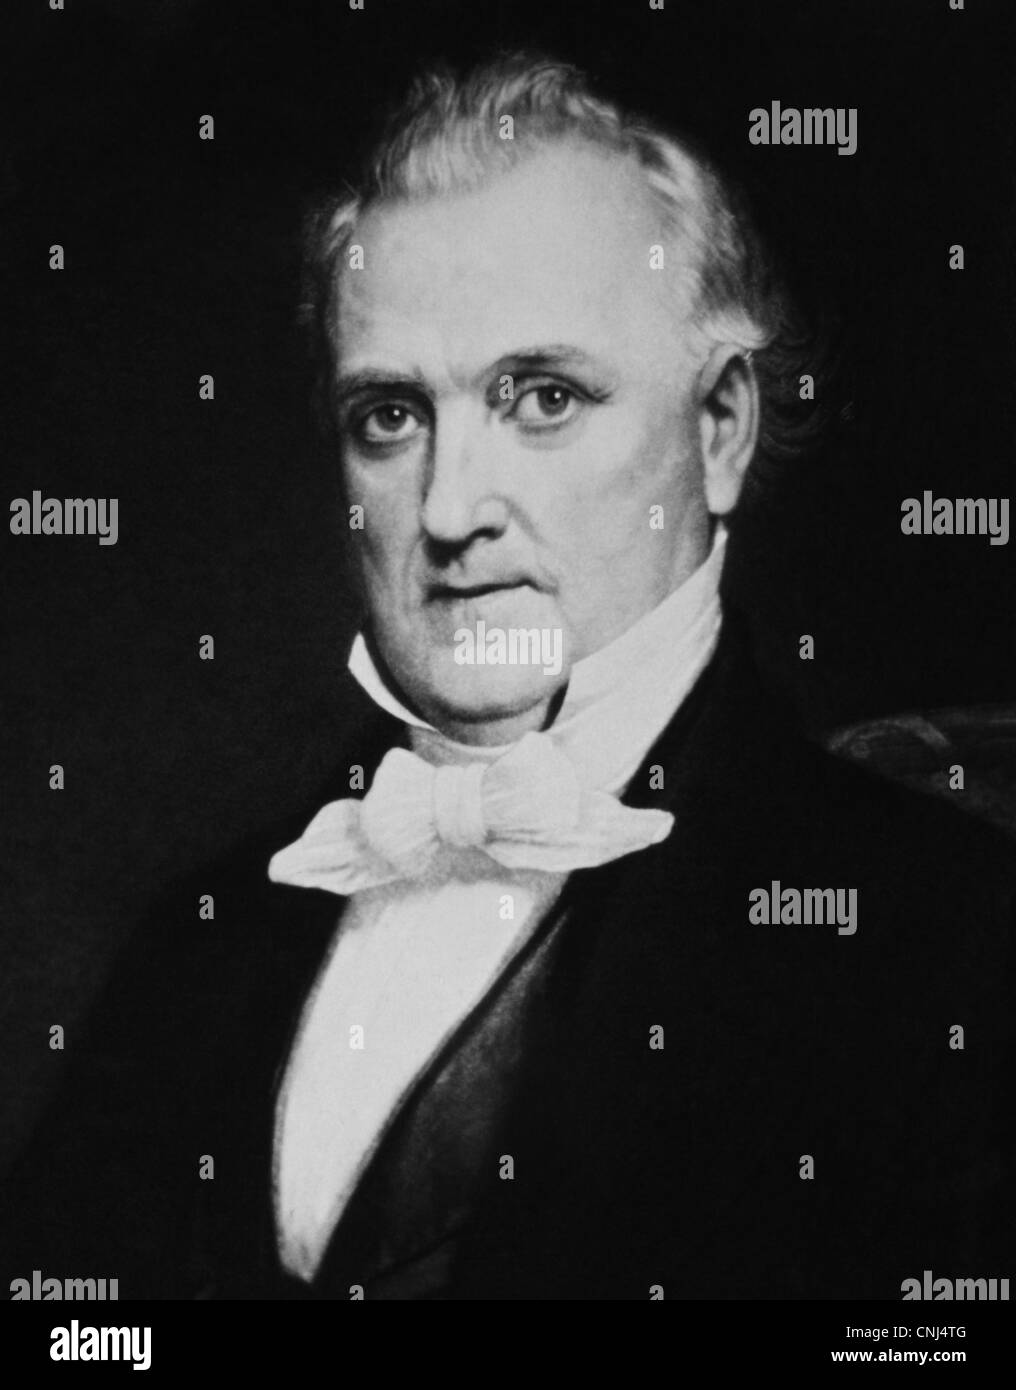 Vintage daguerreotype portrait photo of James Buchanan (1791 – 1868) – the 15th US President (1857 - 1861). Photo circa 1857. Stock Photo